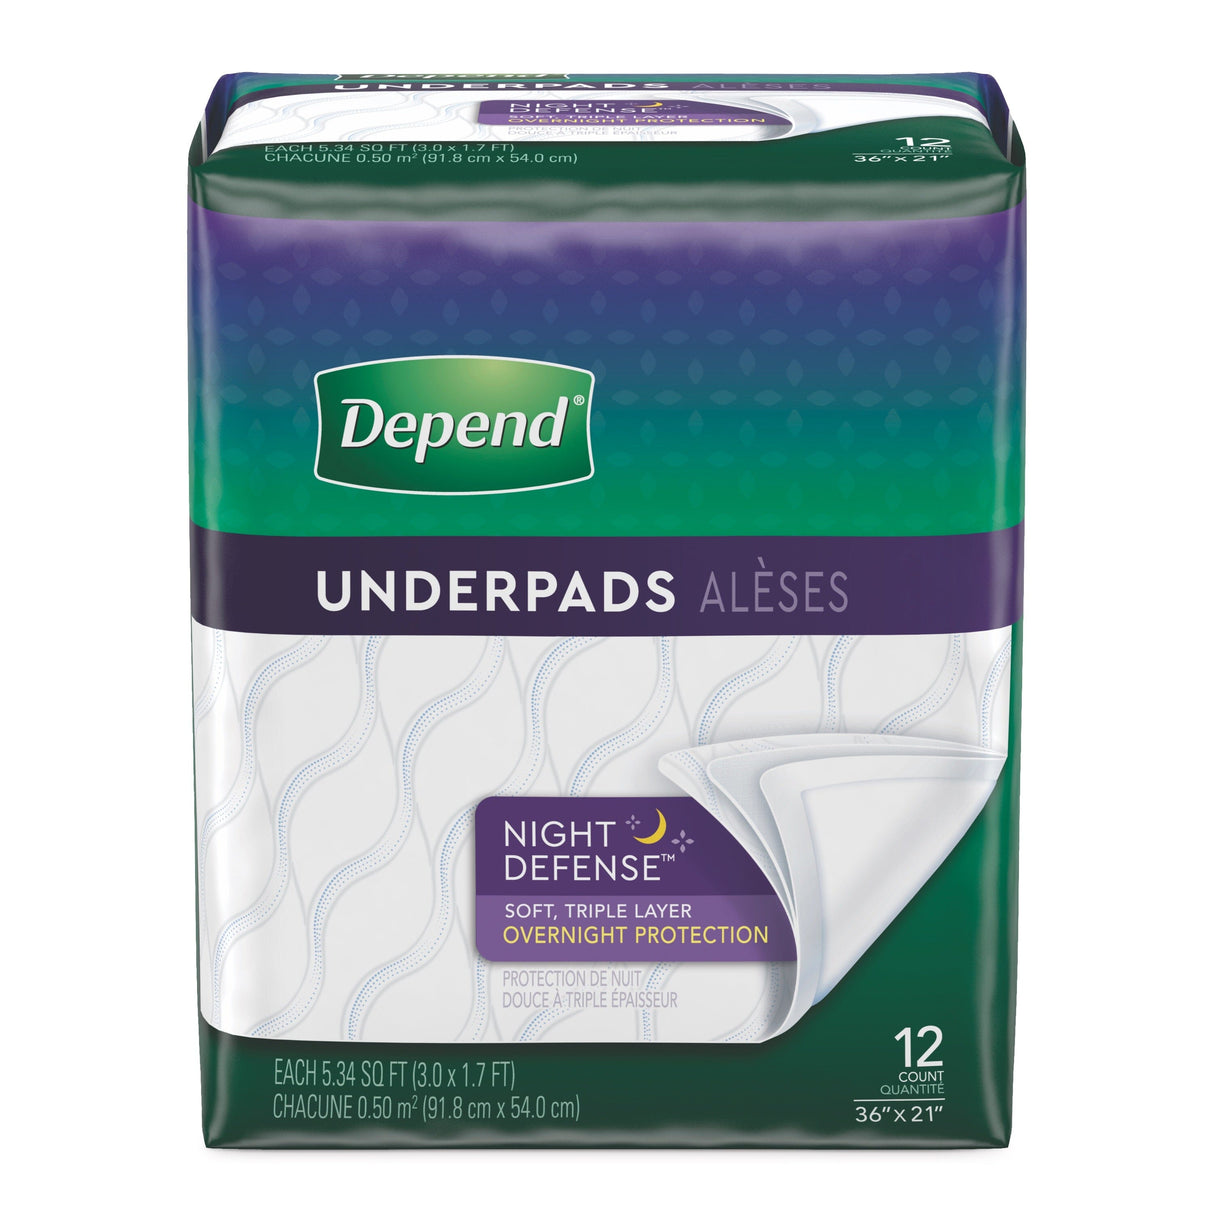 Image of Depend Underpad 12, Overnight, 36" x 21"